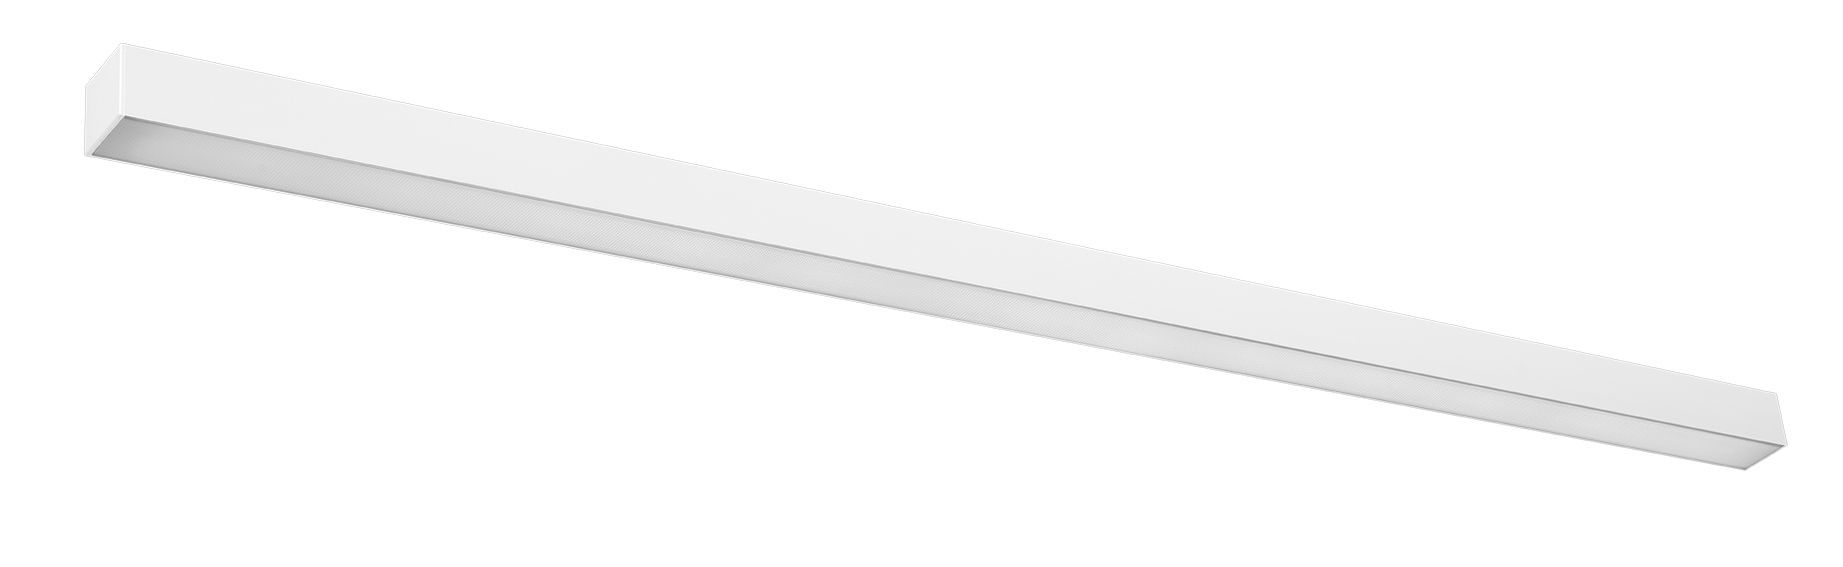 LED Wandlampe 150 cm lang 3000 K 4940 lm Weiß Downlight